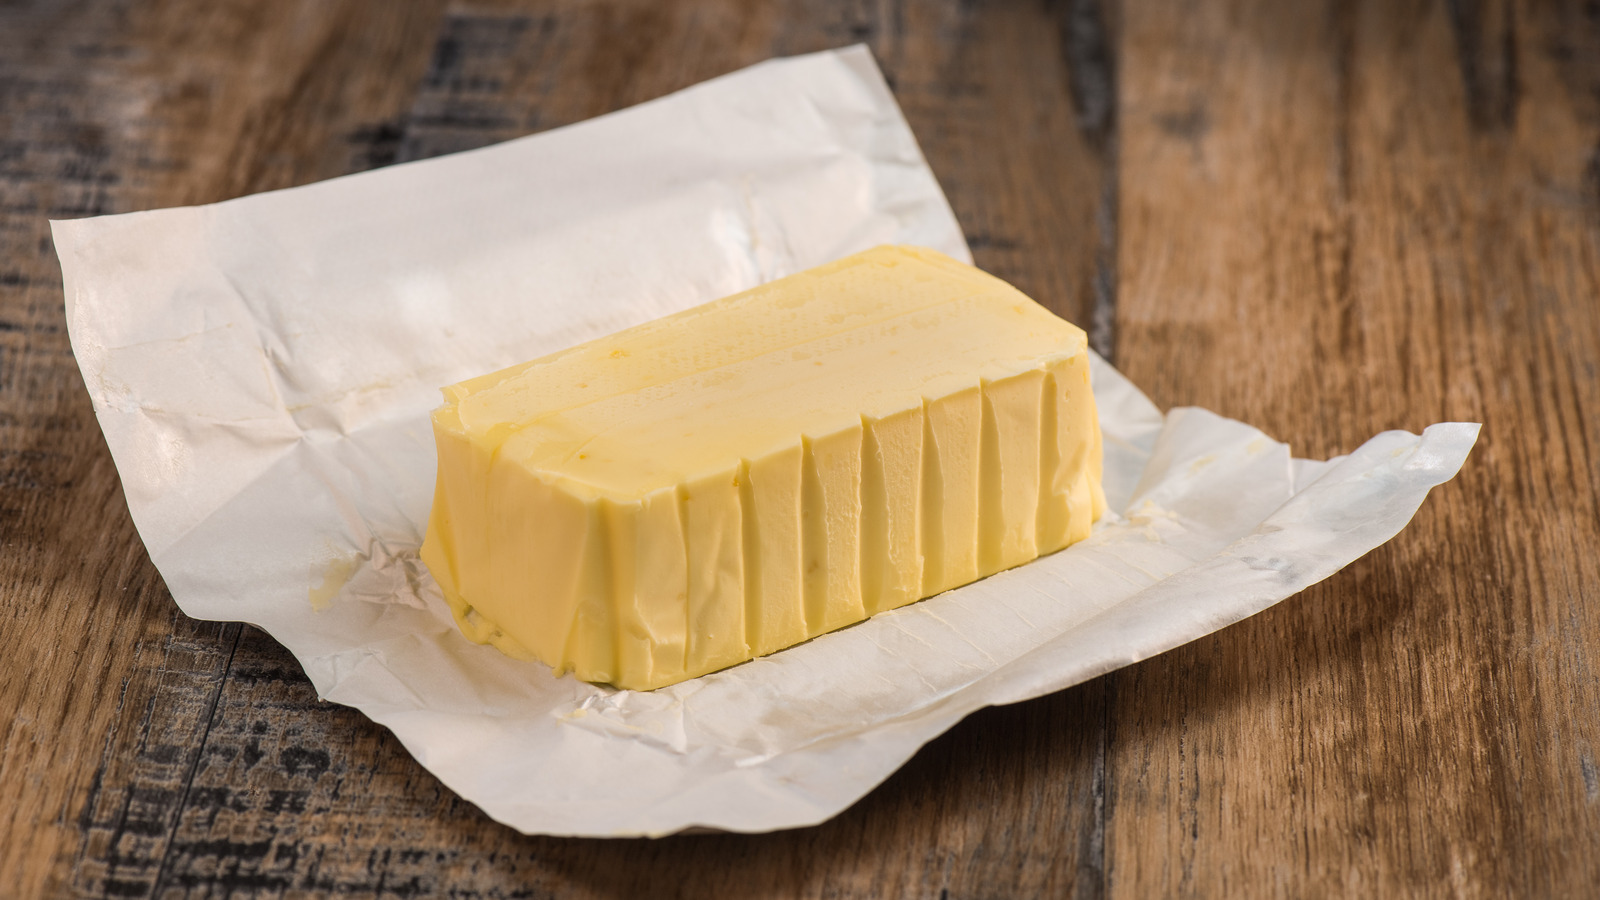 Kerrygold Butter, Pure Irish - 8 Ounces